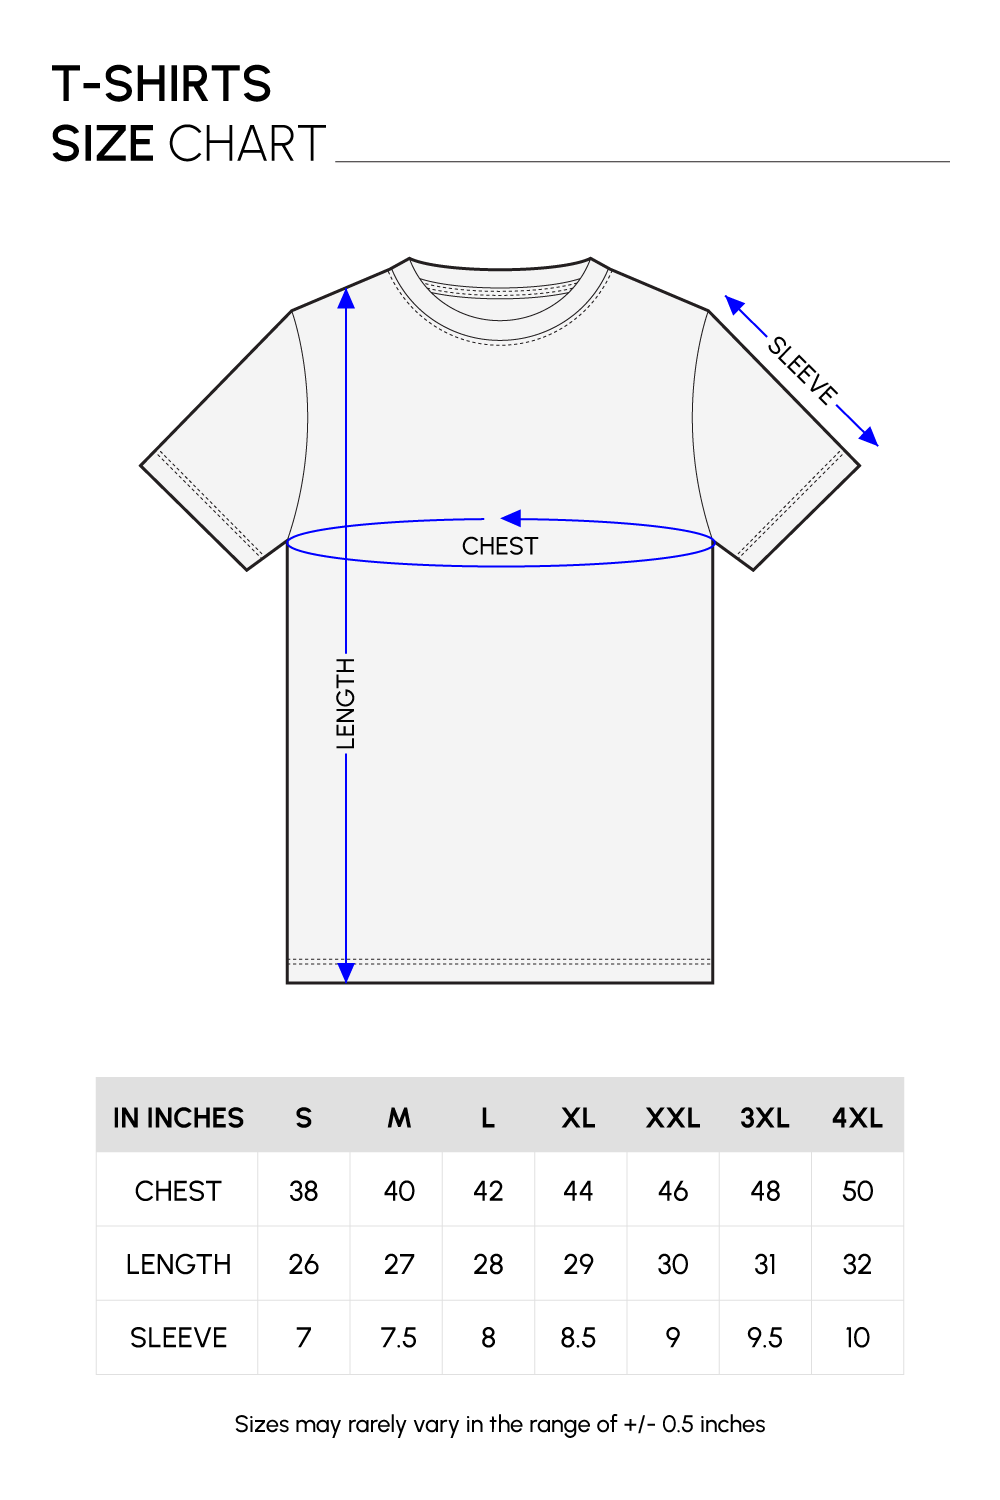 Unisex T-shirt Size Chart